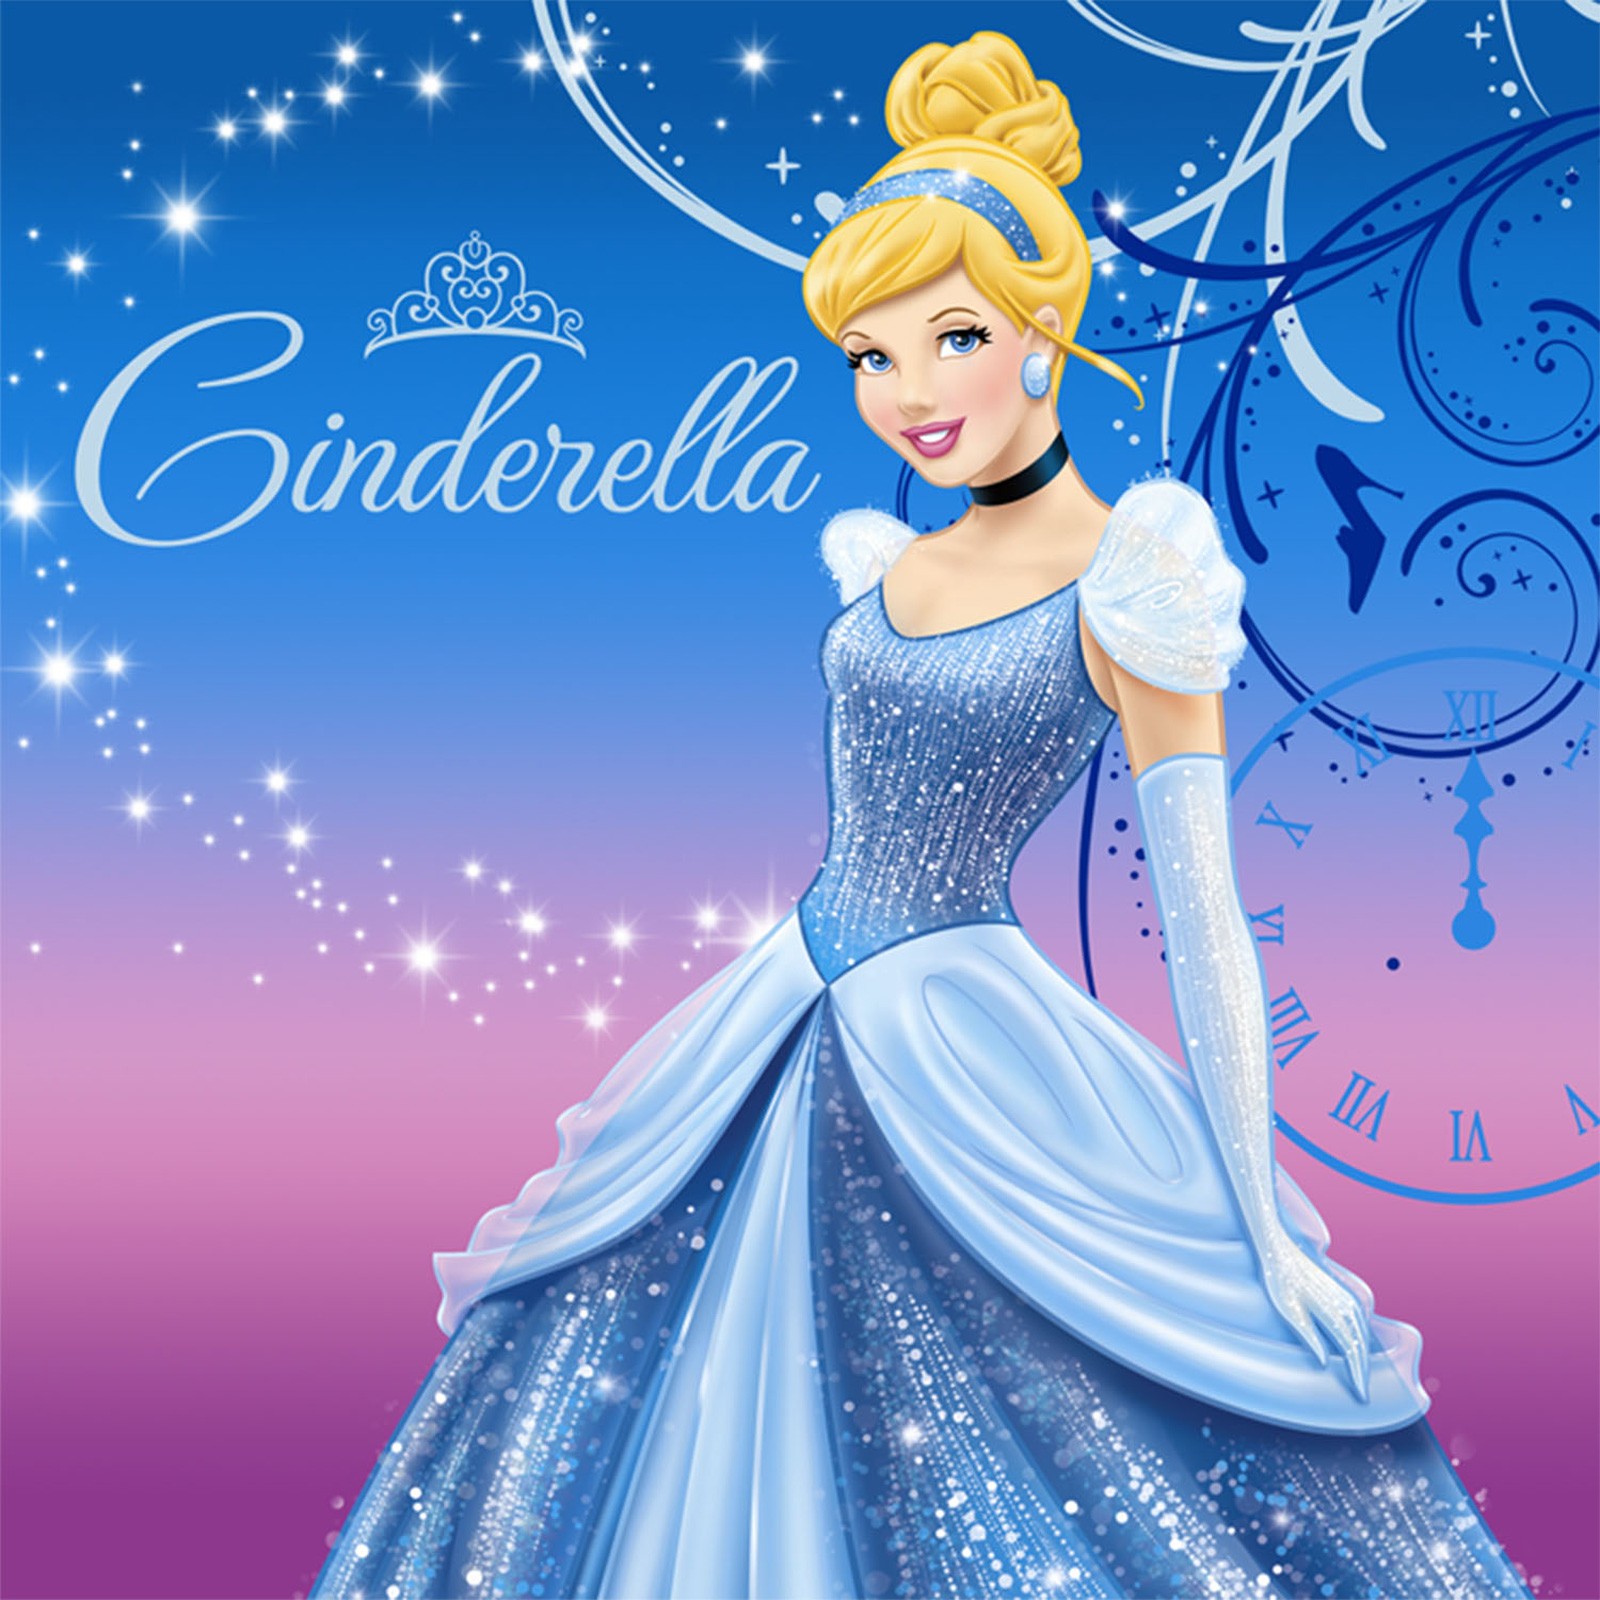 Gambar Cinderella – retorika